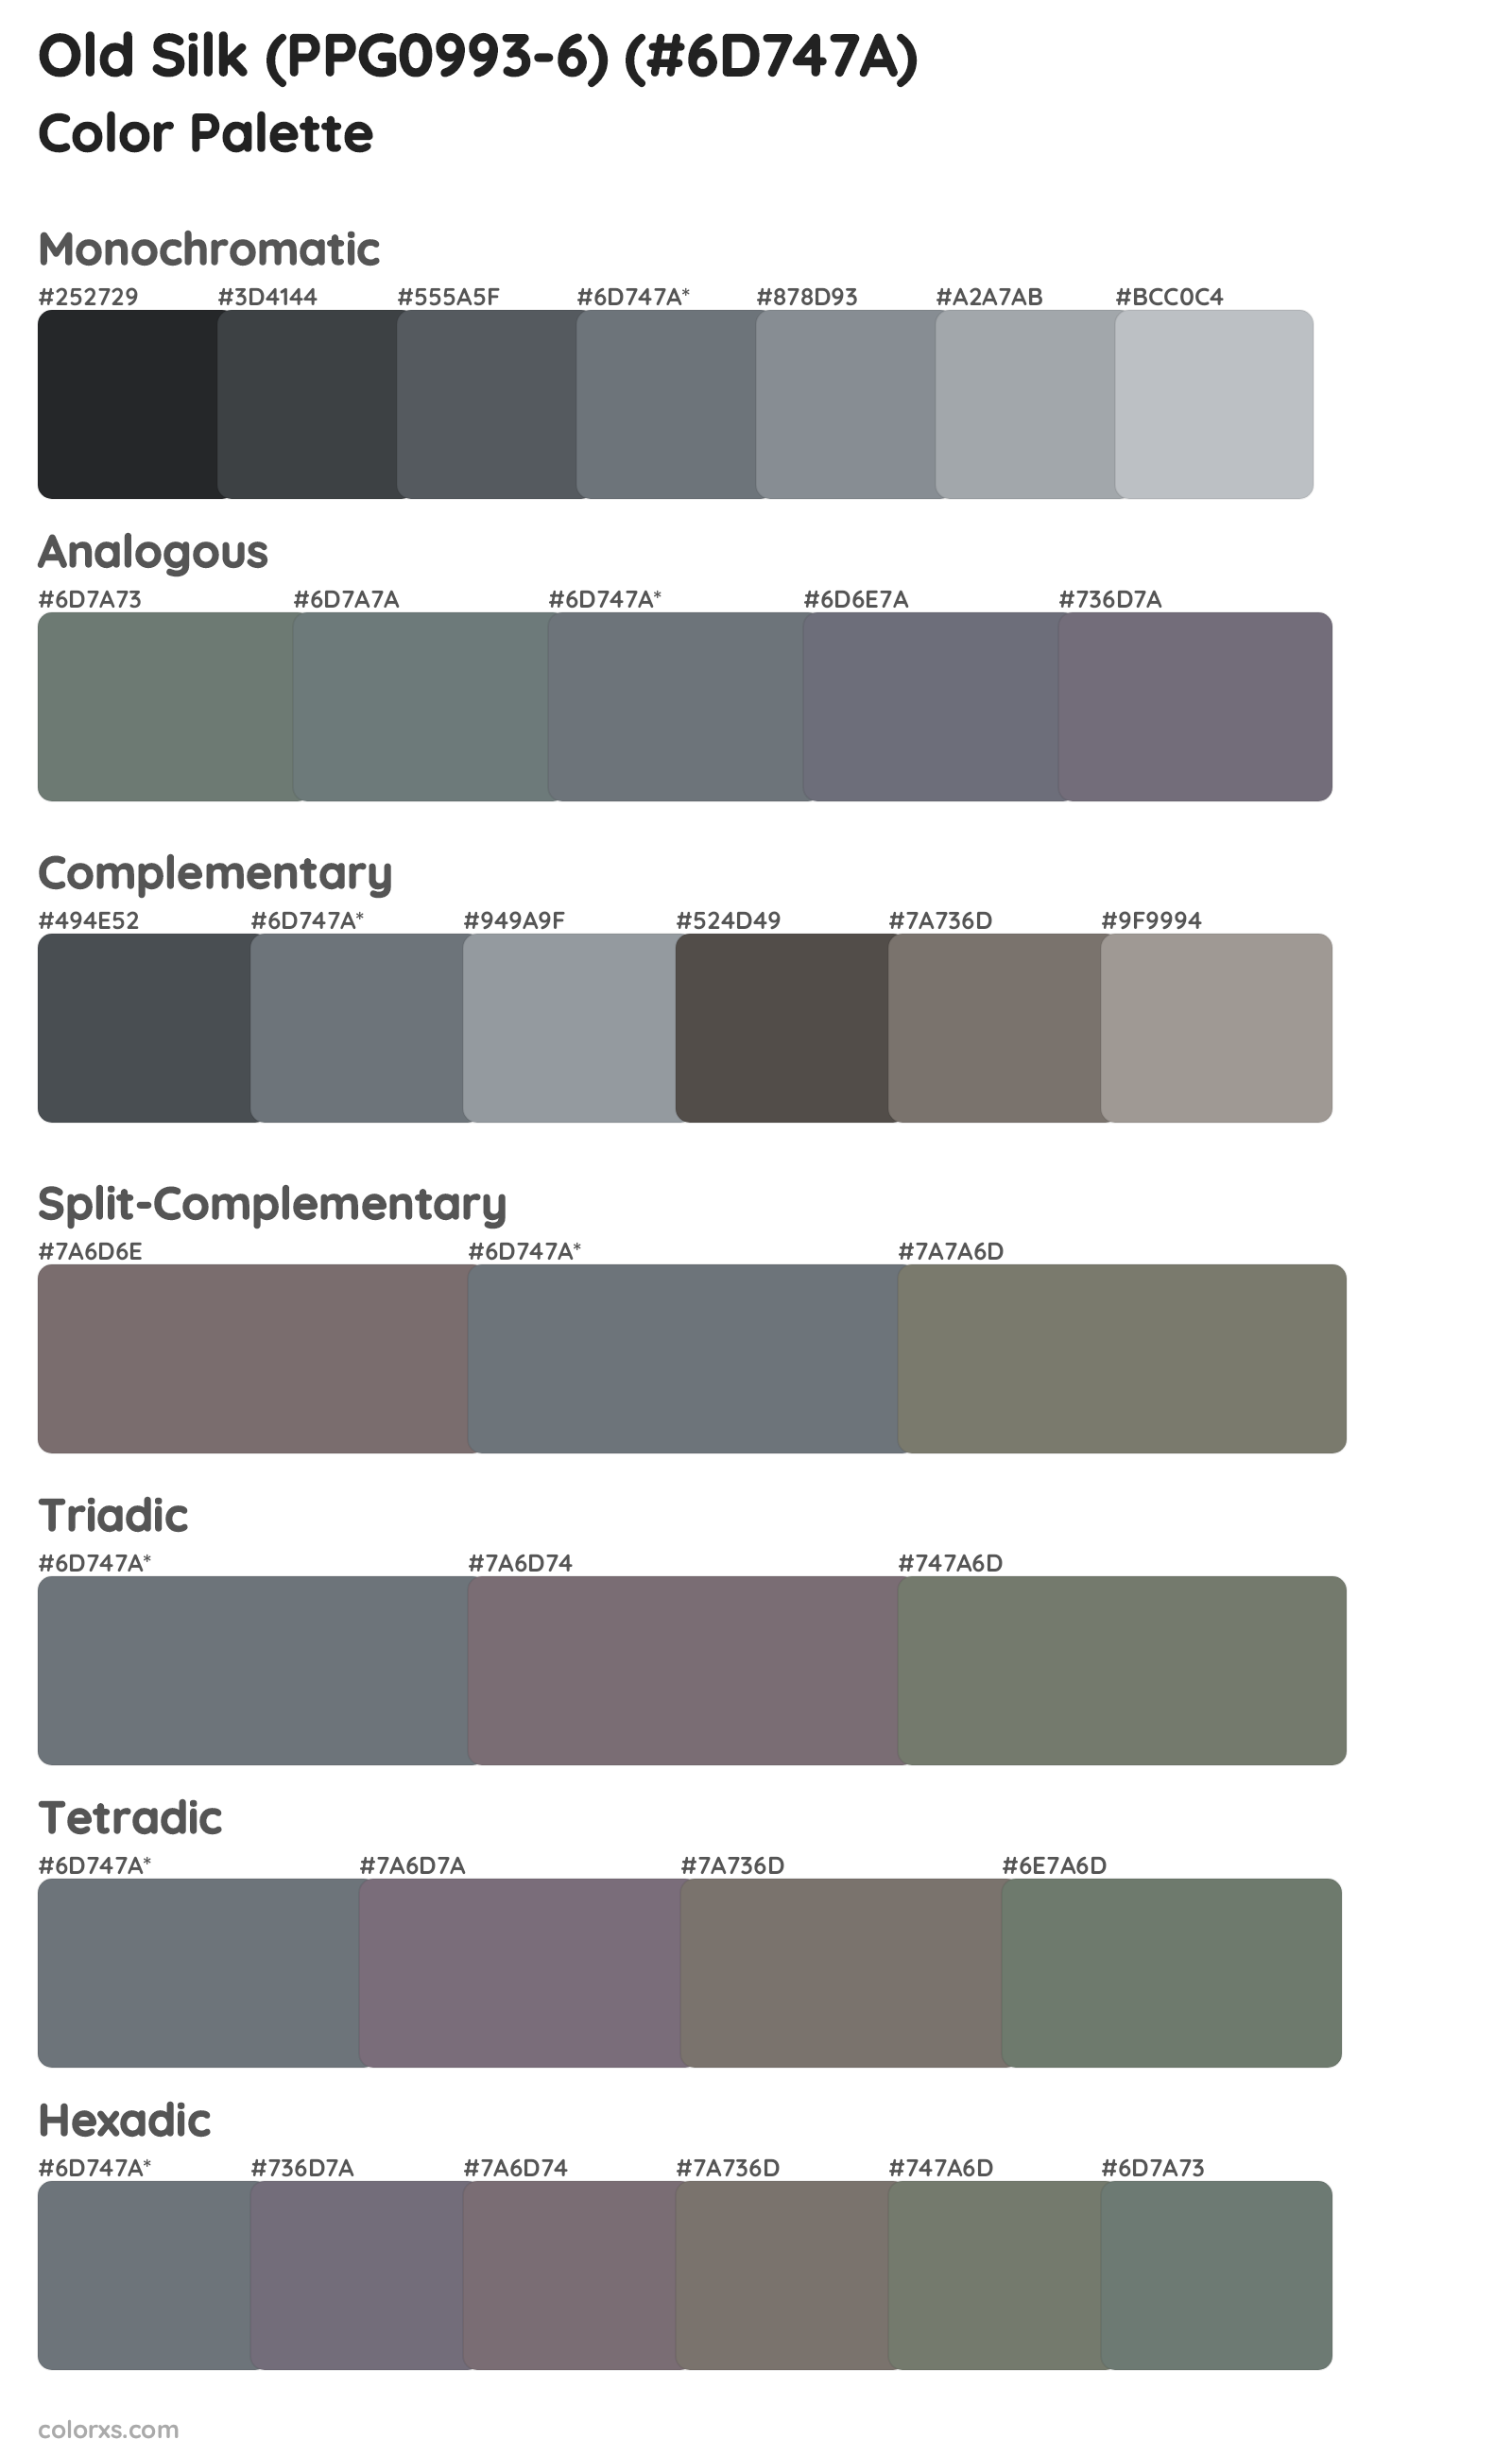 Old Silk (PPG0993-6) Color Scheme Palettes